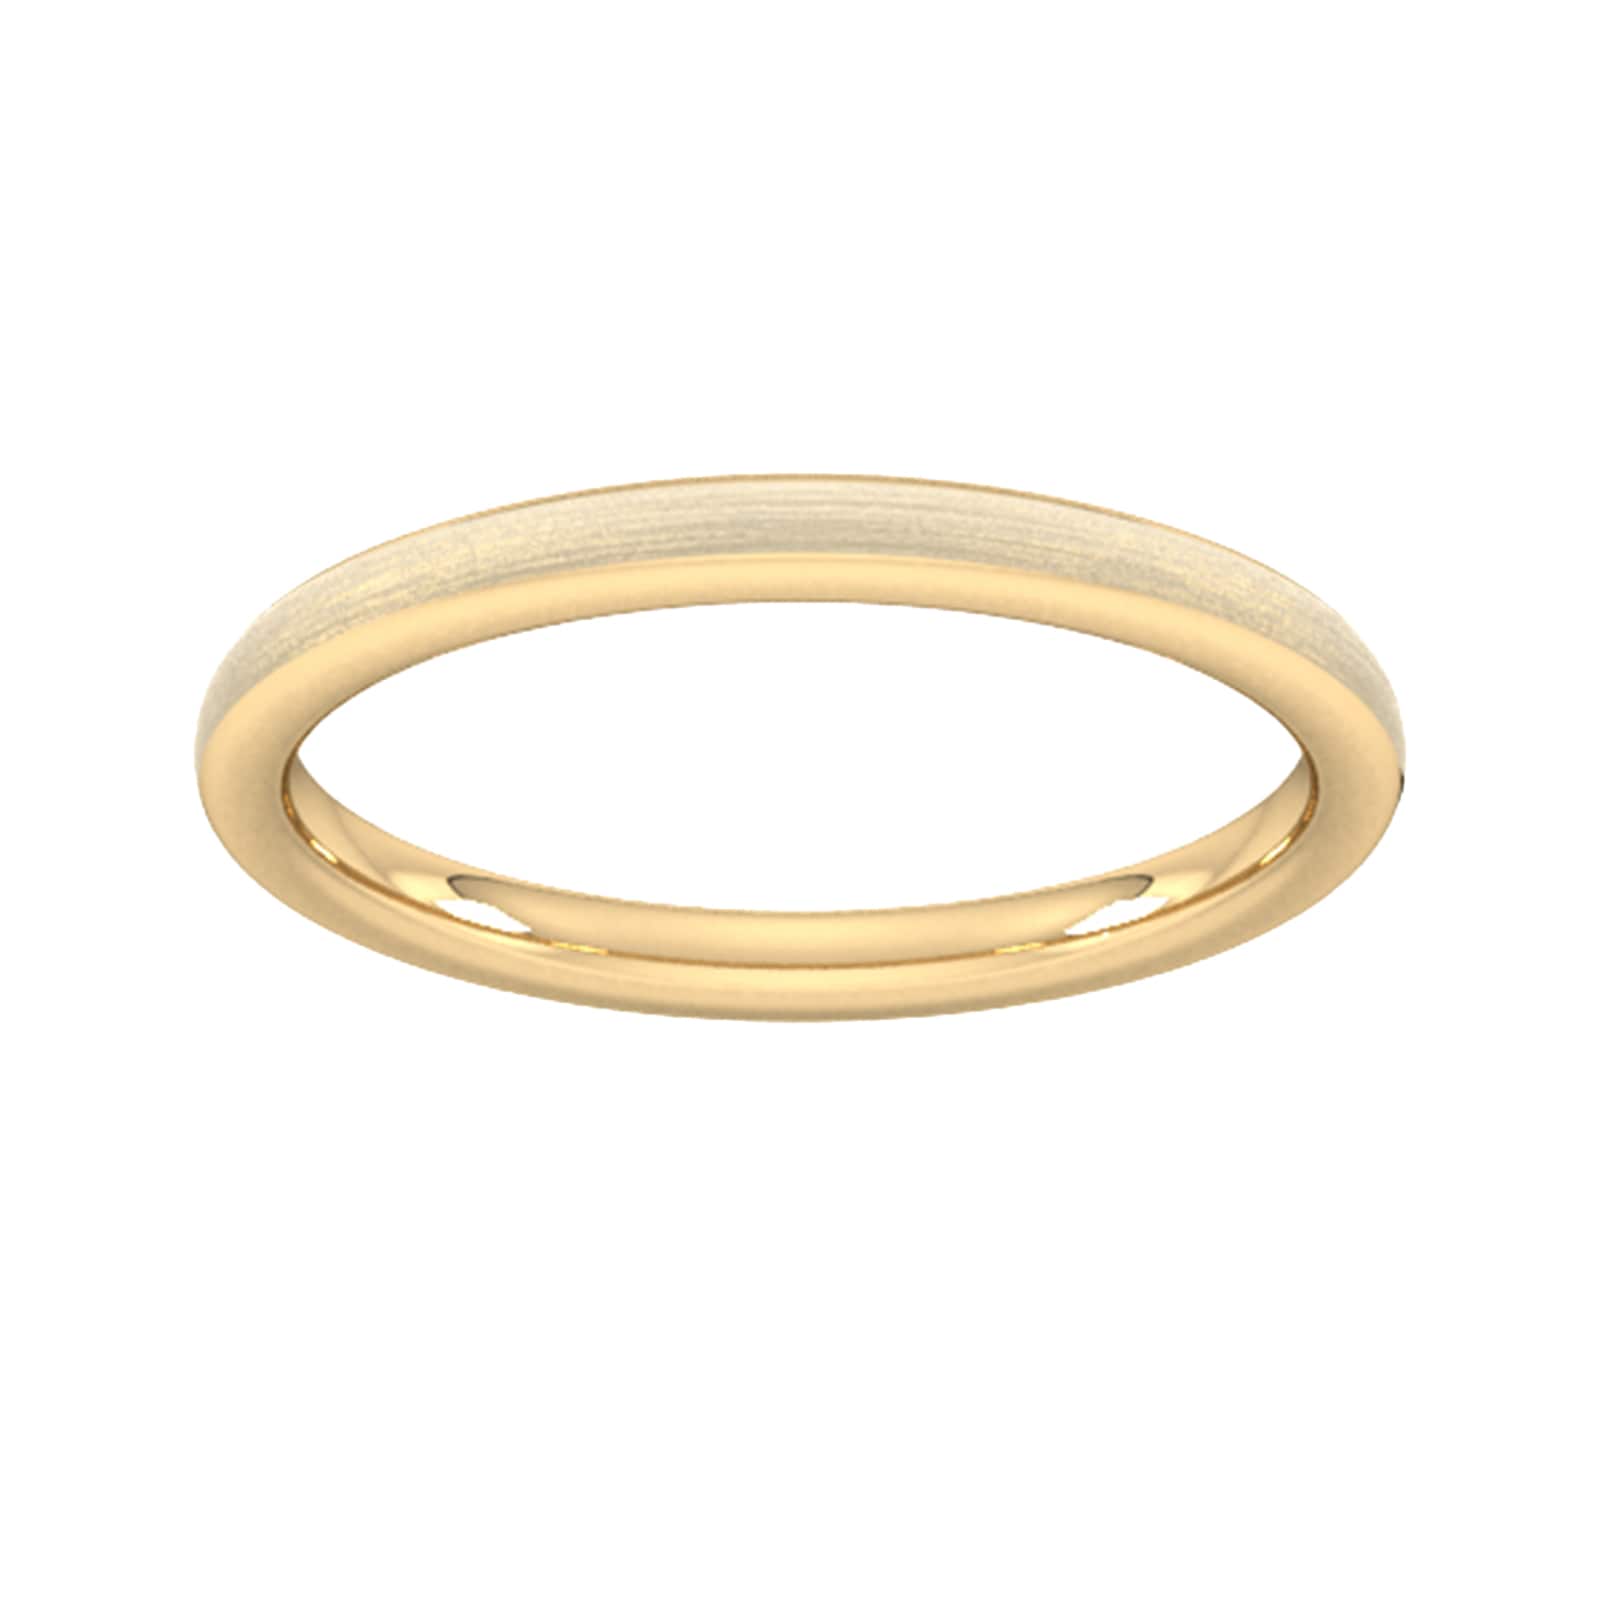 2mm Flat Court Heavy Matt Finished Wedding Ring In 9 Carat Yellow Gold - Ring Size Q